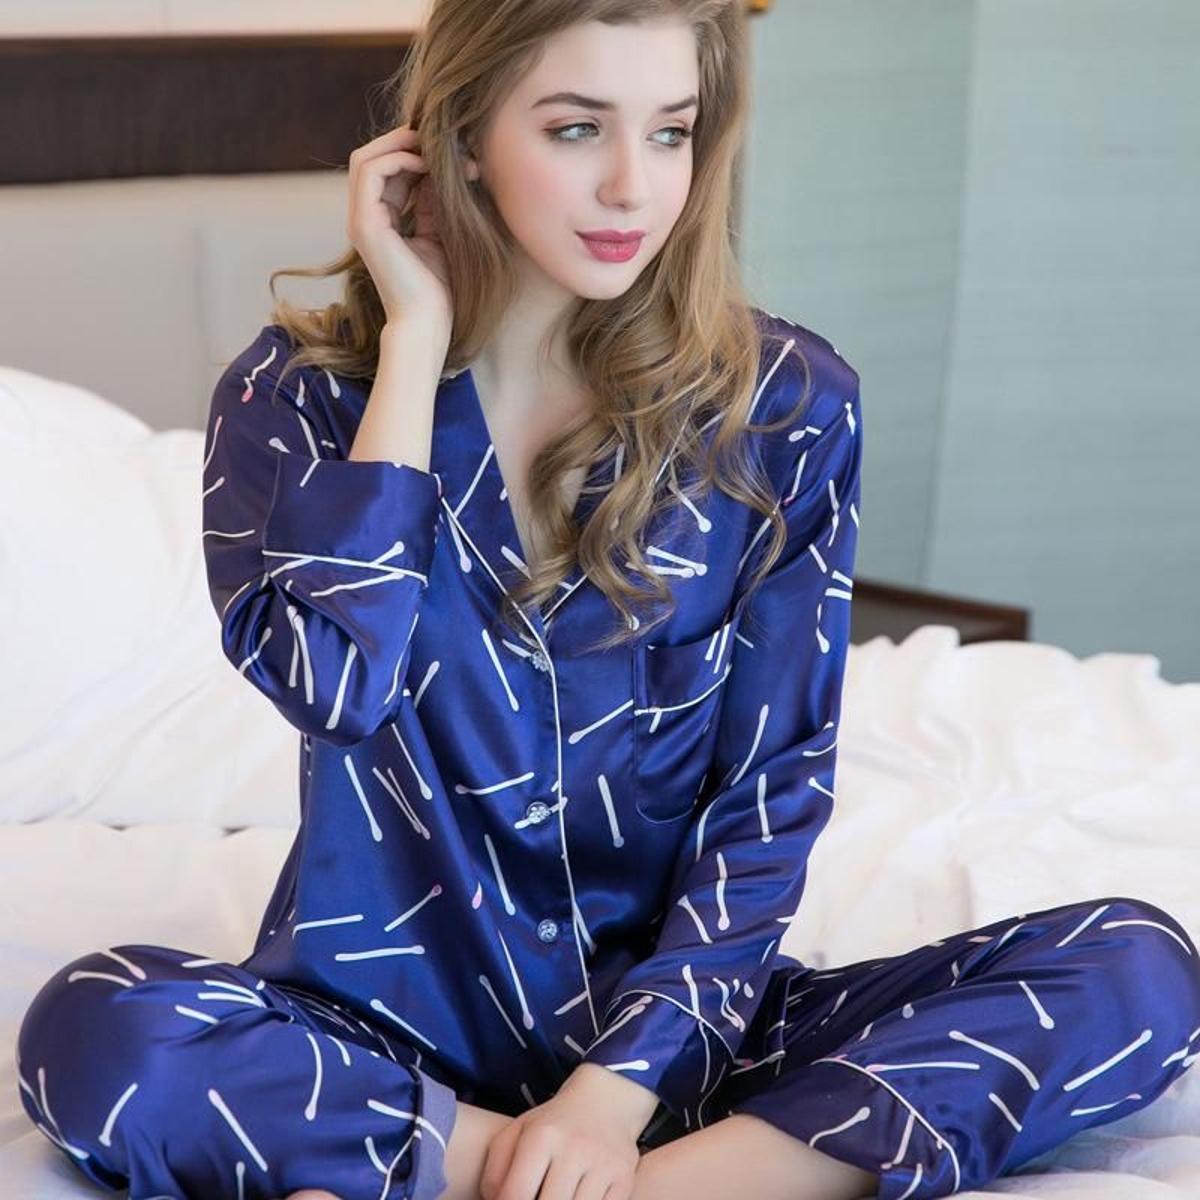 Buy Valerie nightwear/sleepwear is designed for ultimate comfort